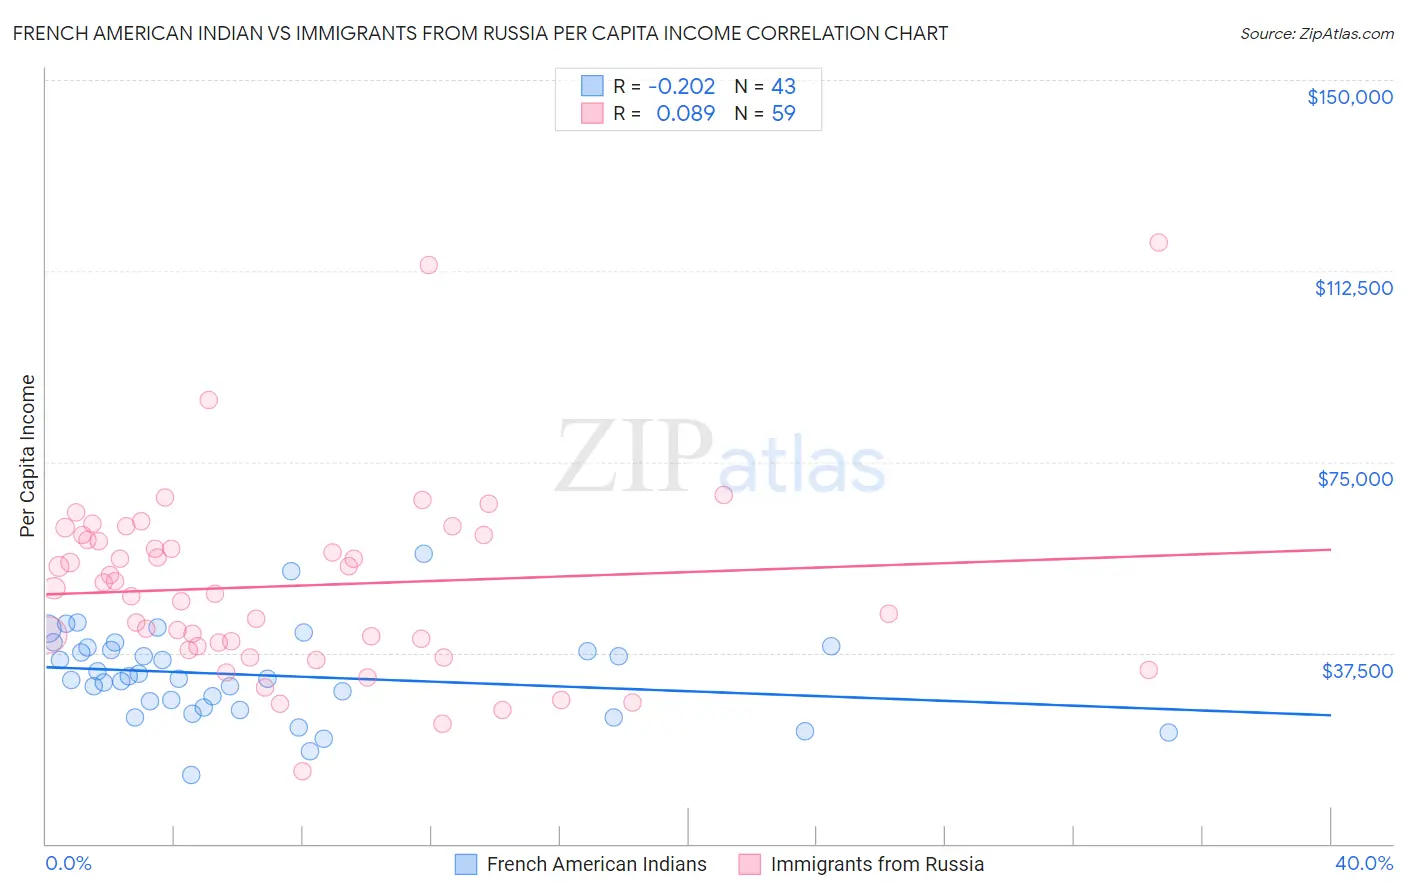 French American Indian vs Immigrants from Russia Per Capita Income